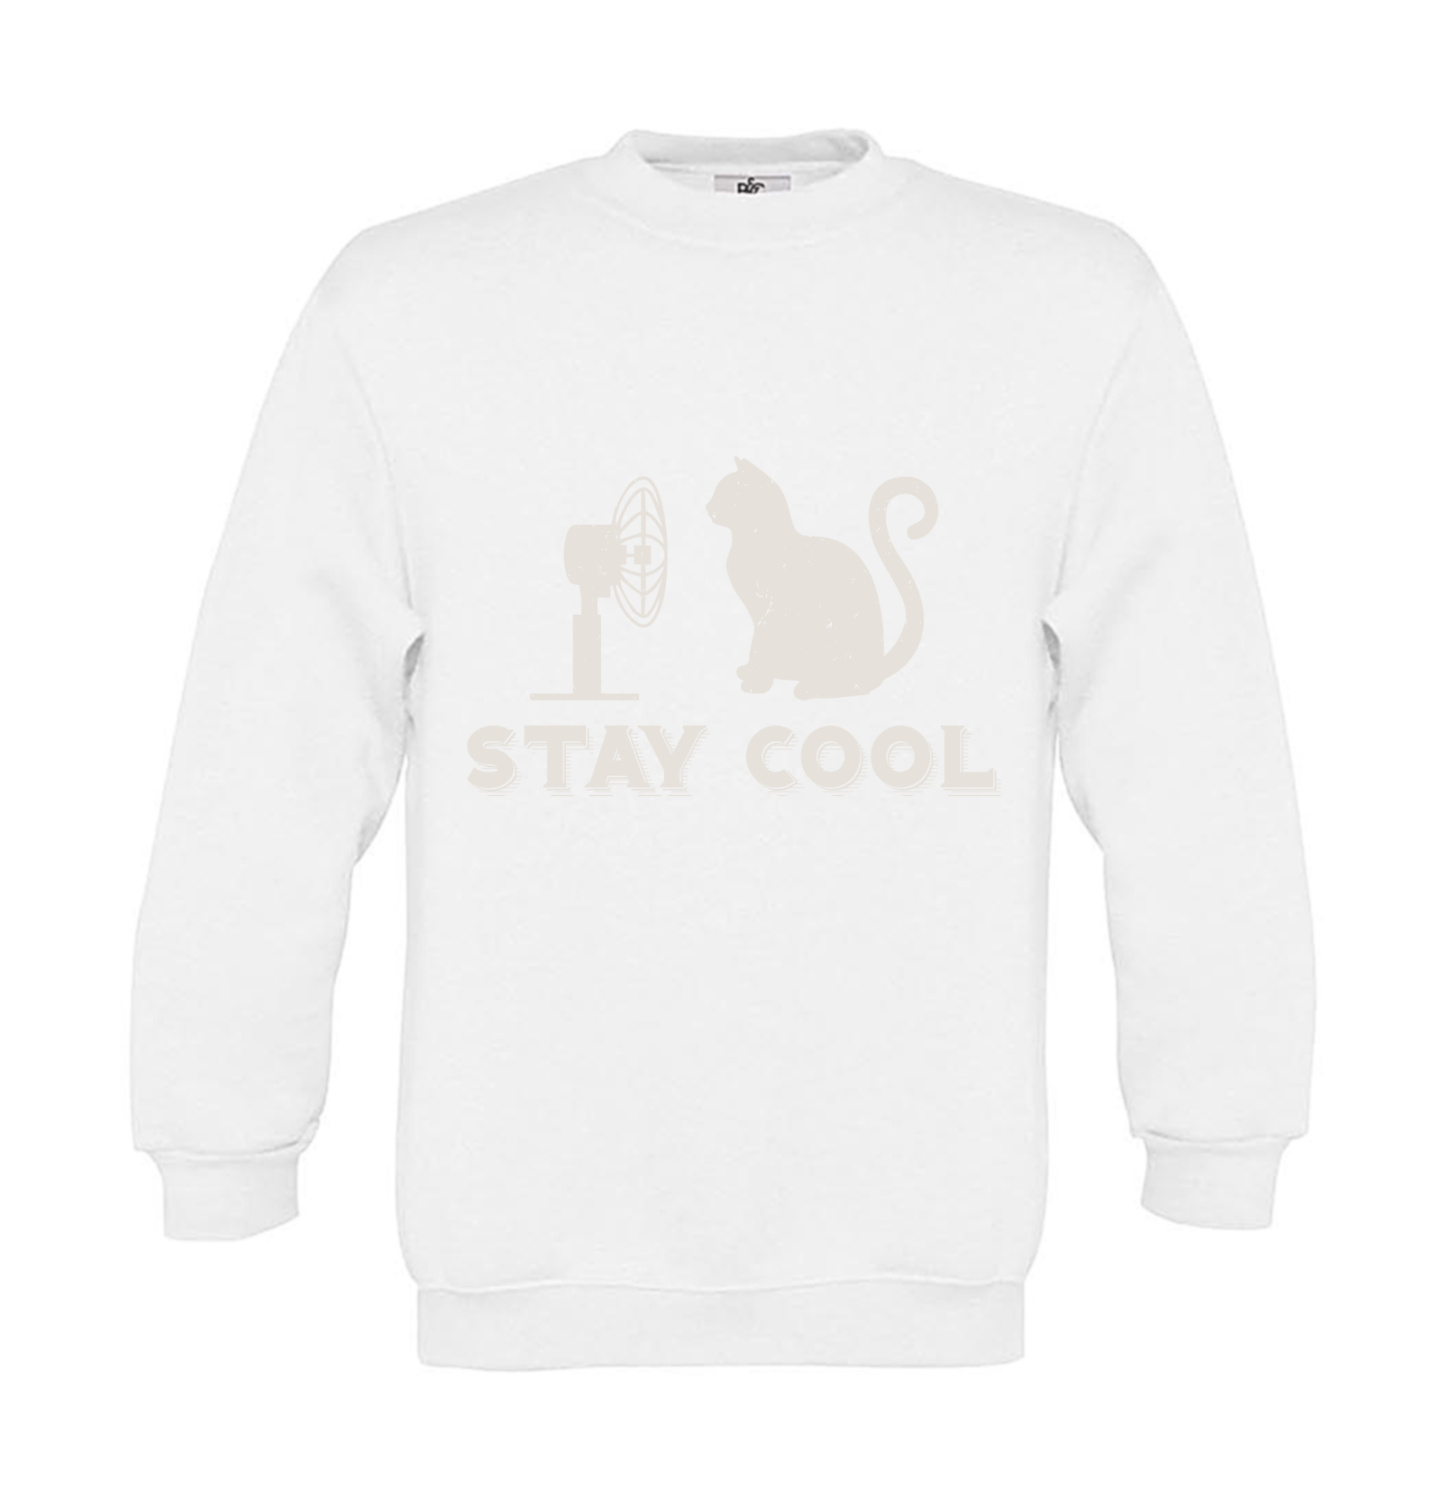 Sweatshirt Kinder Katzen - Stay Cool